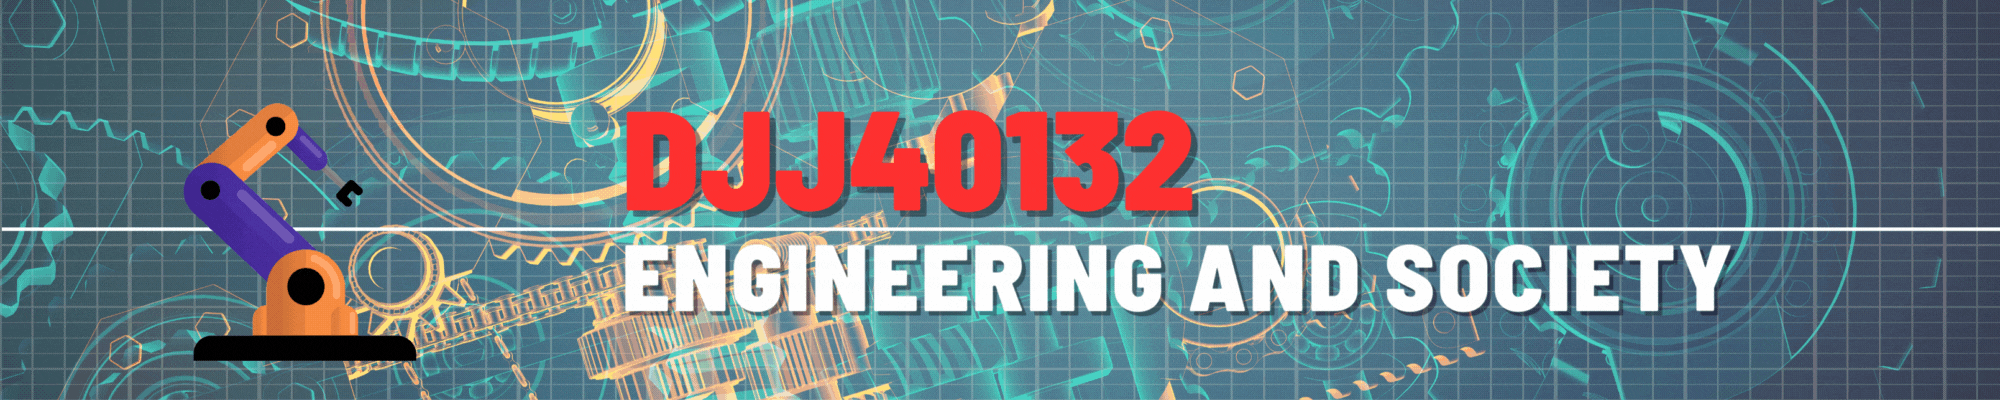 DJJ40132 ENGINEERING &amp; SOCIETY